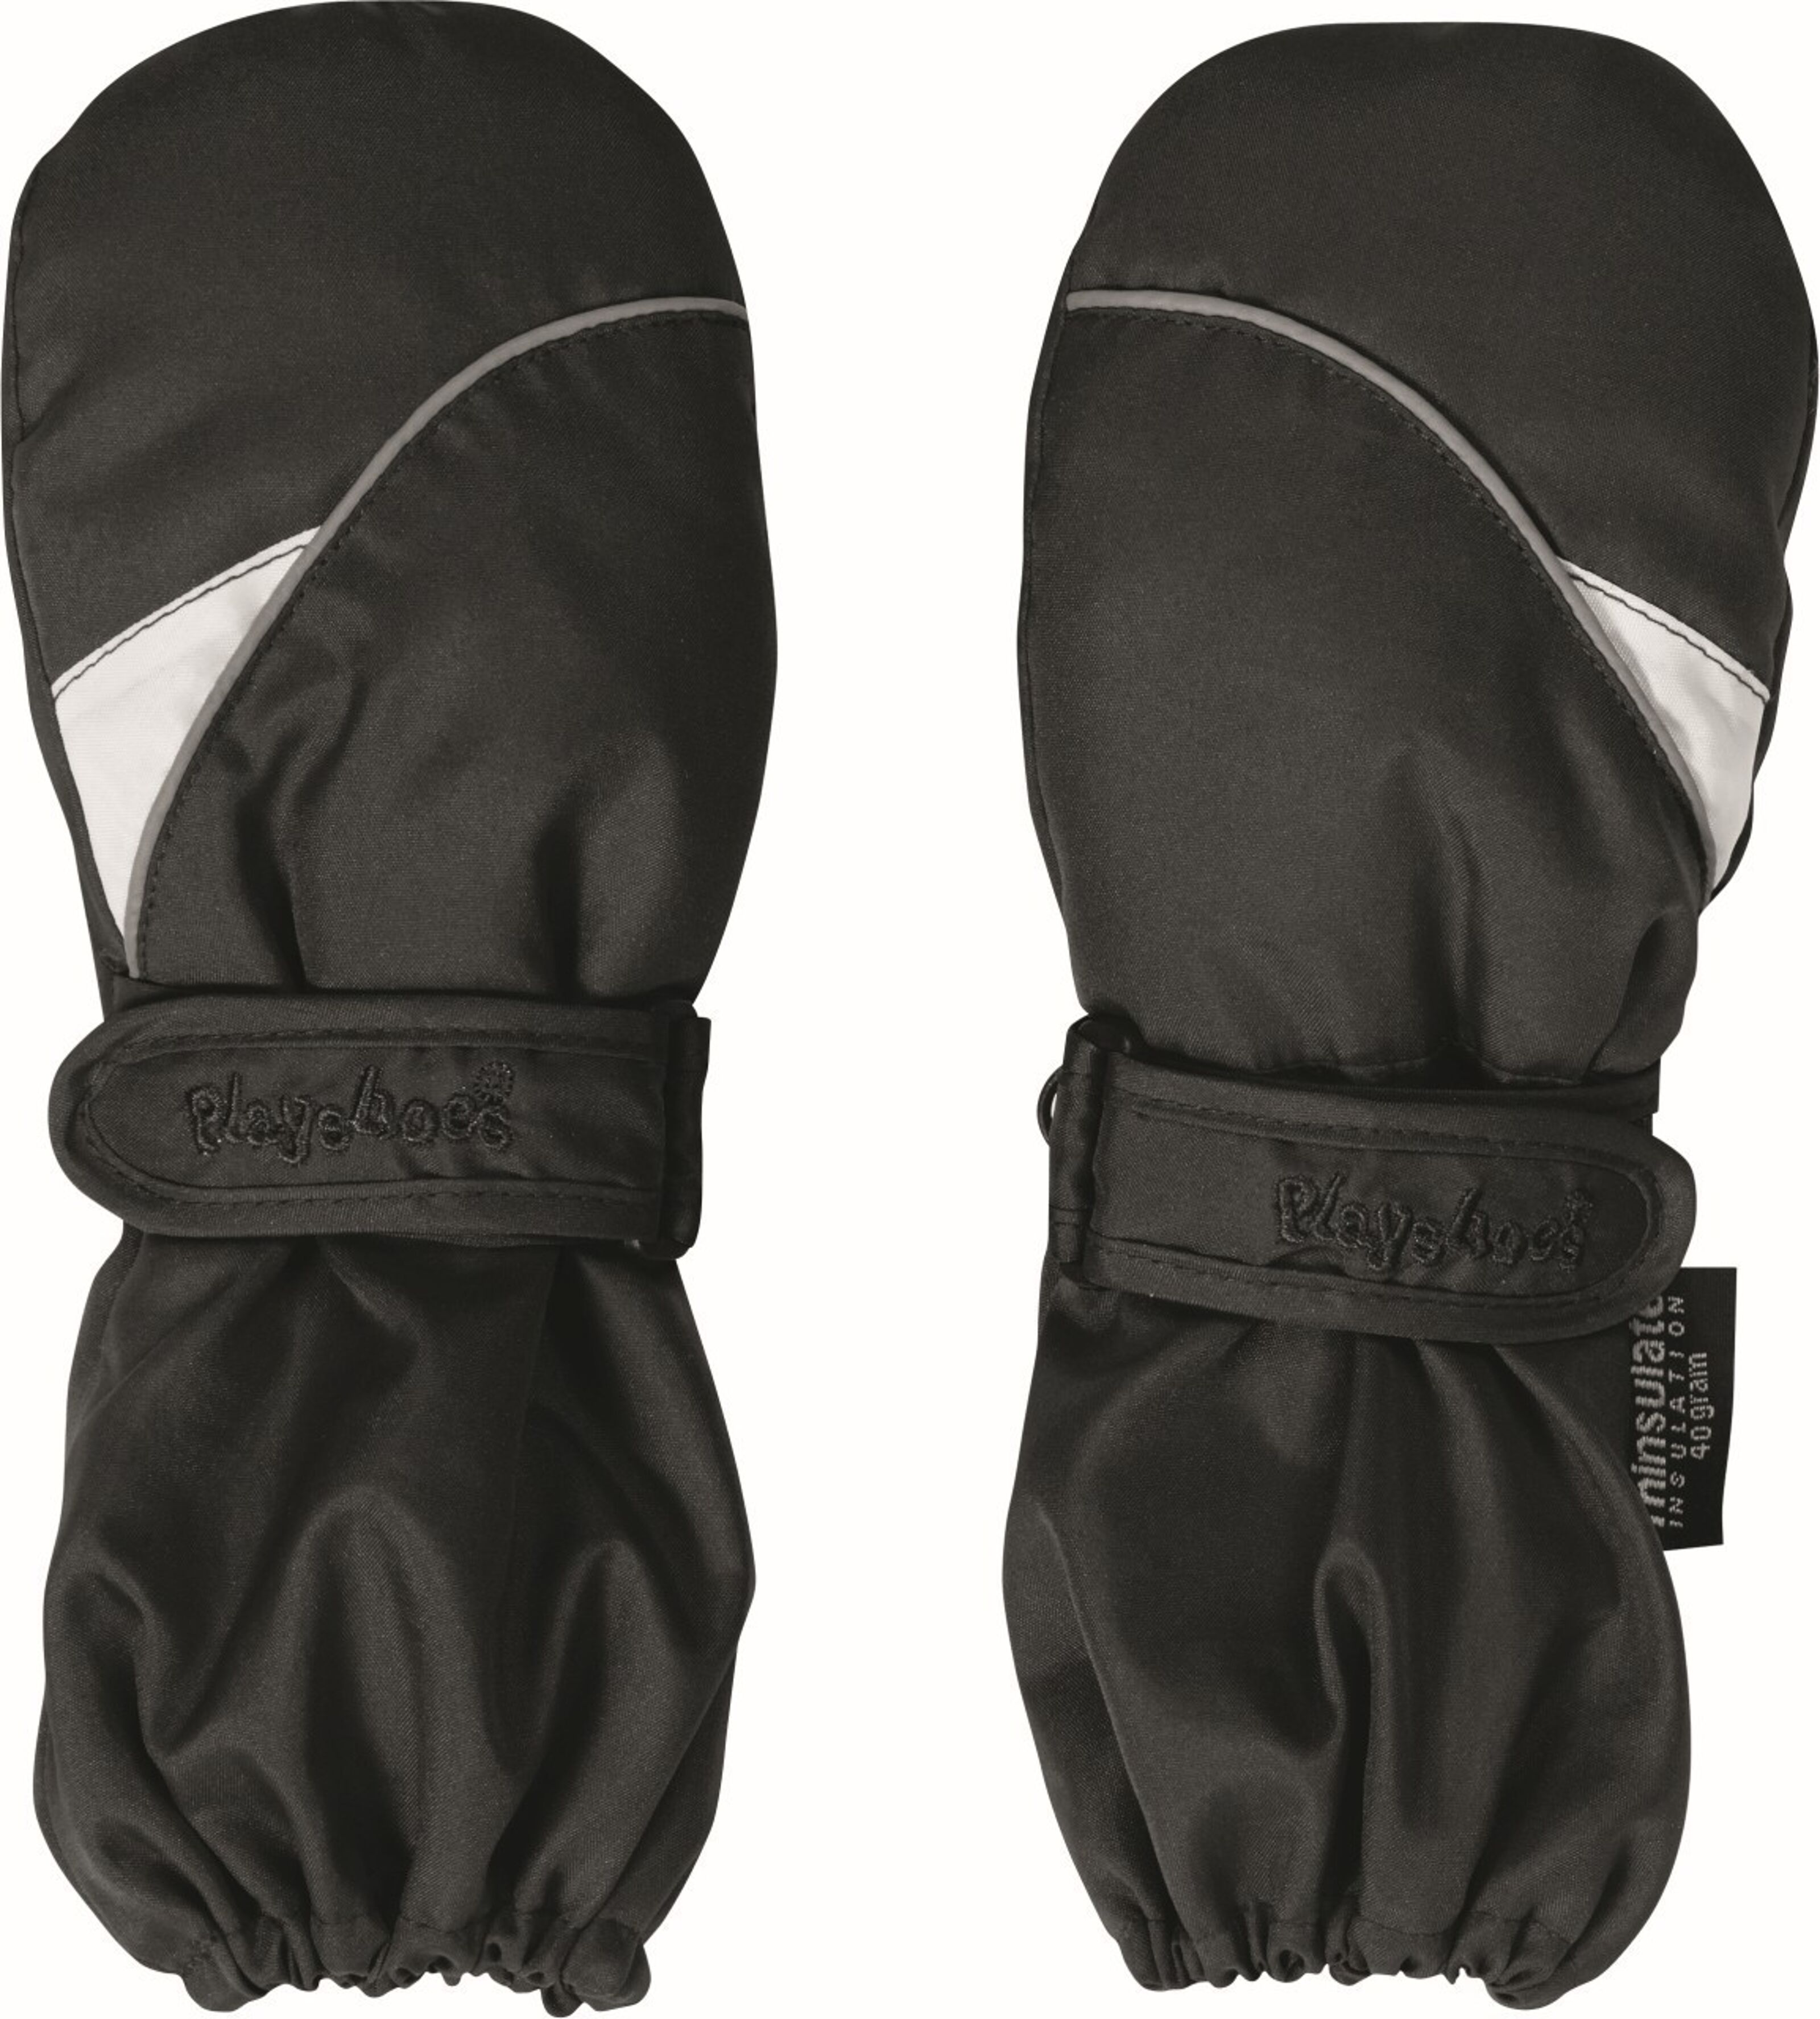 Buy wholesale glove -black Mitten